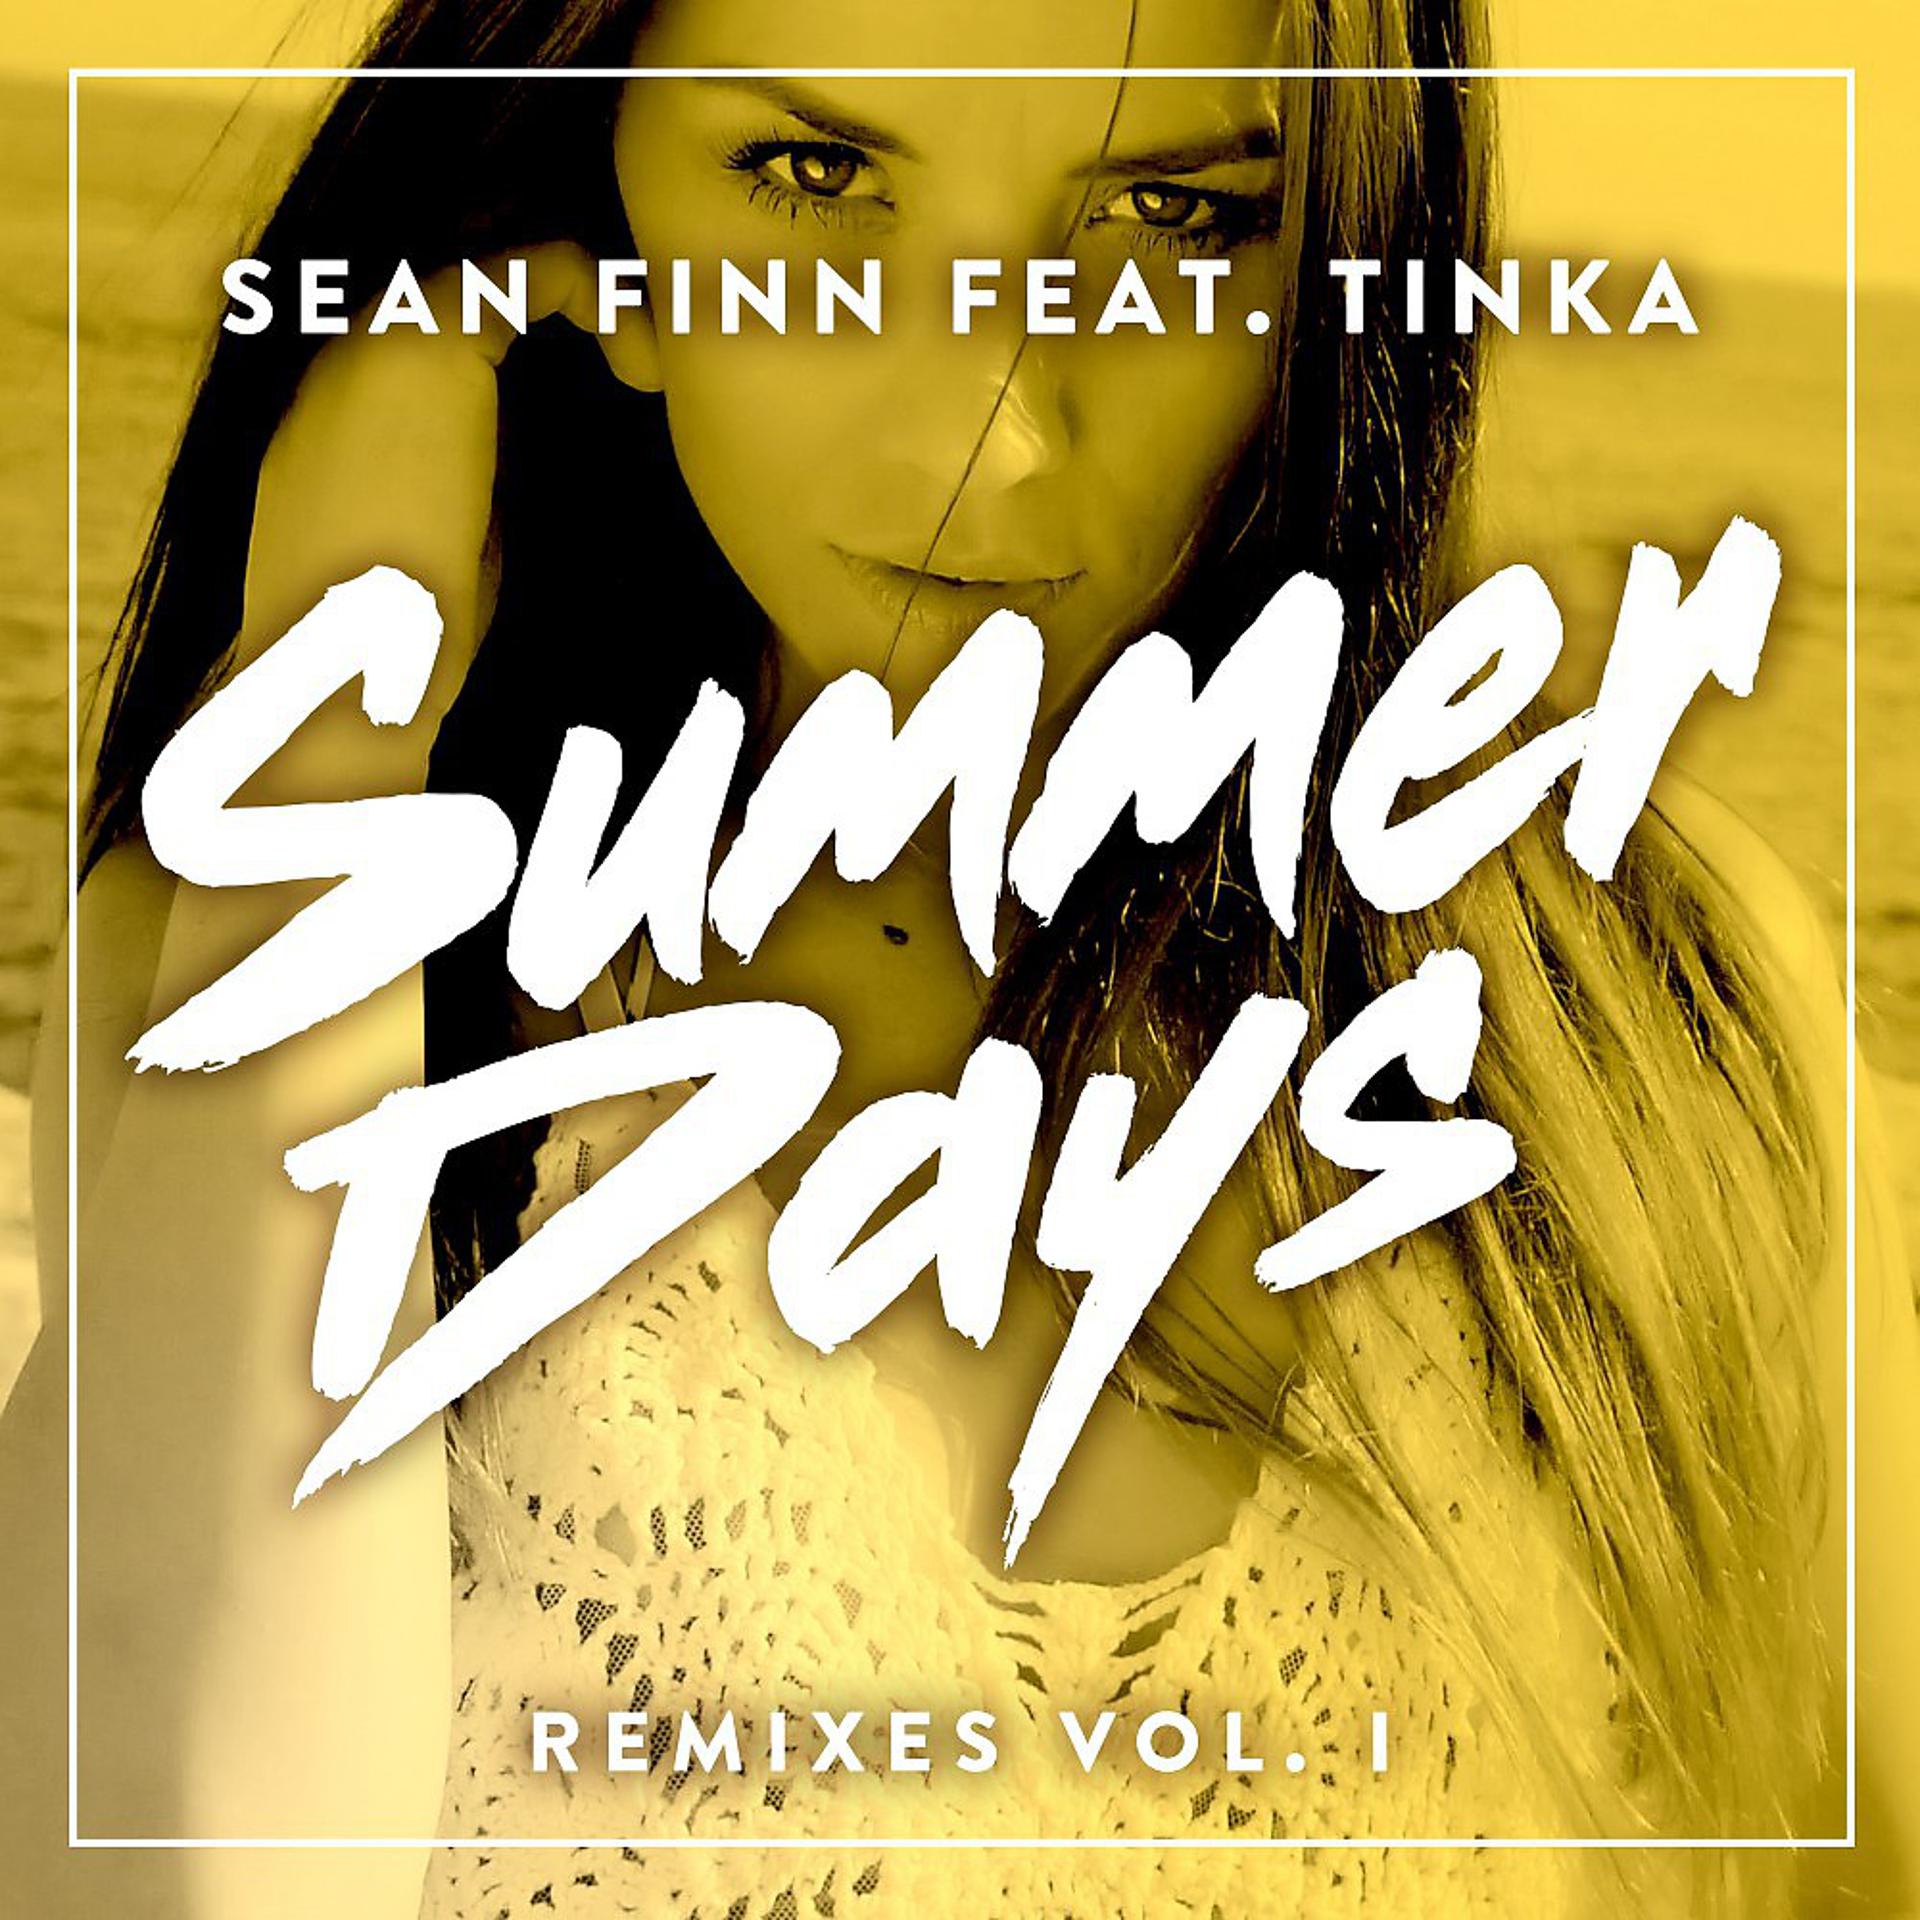 Ben delay feat. Sean Finn Summer Days. Sean Finn feat. Tinka Summer Days. Sean Finn feat. Tinka tinka — Summer Days. Sean Finn feat. Tinka Summer Days Ben delay Remix.